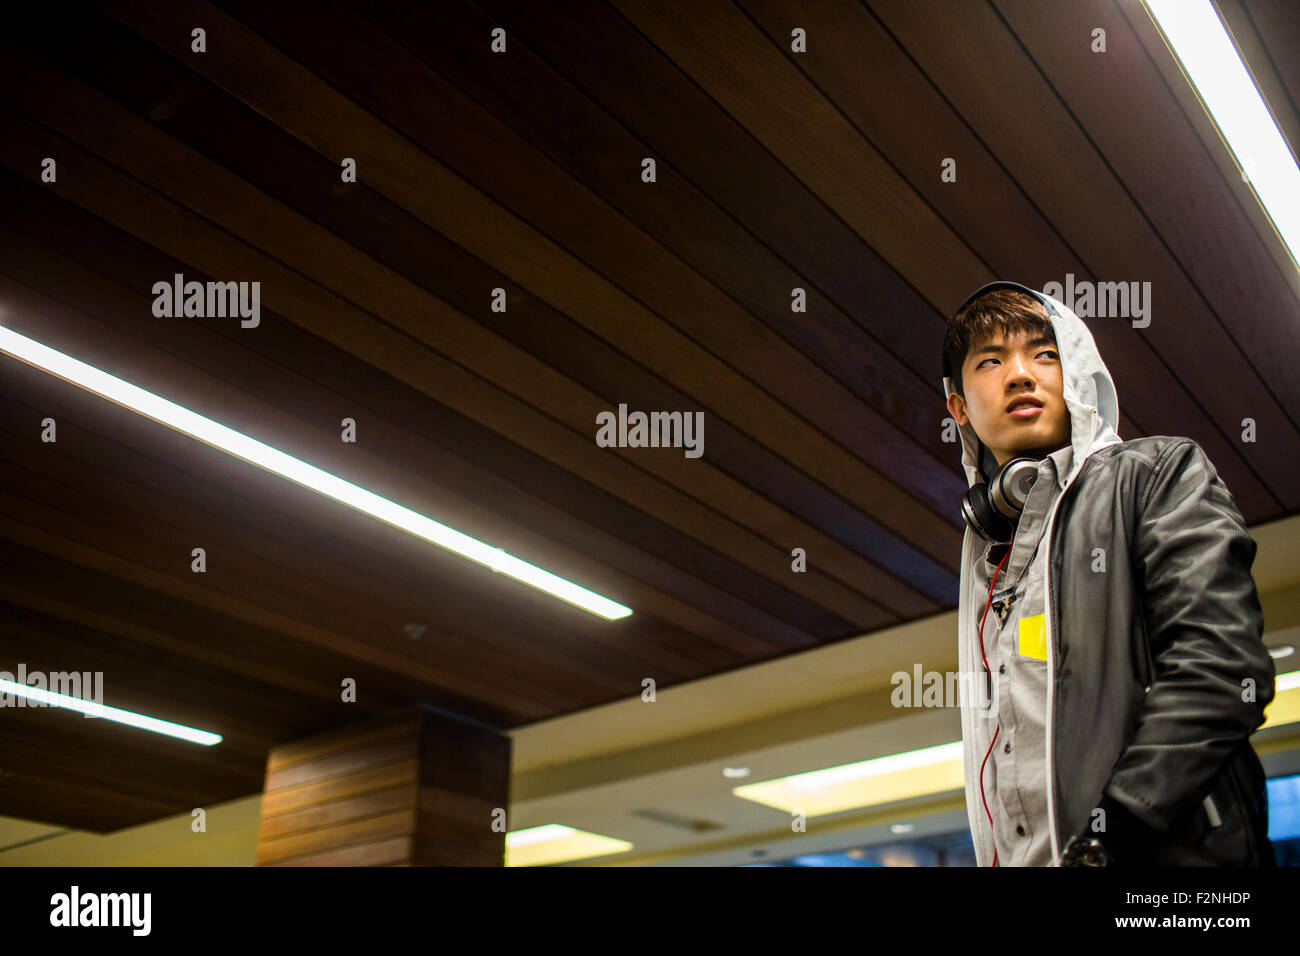 Asian man walking under wooden ceiling Stock Photo